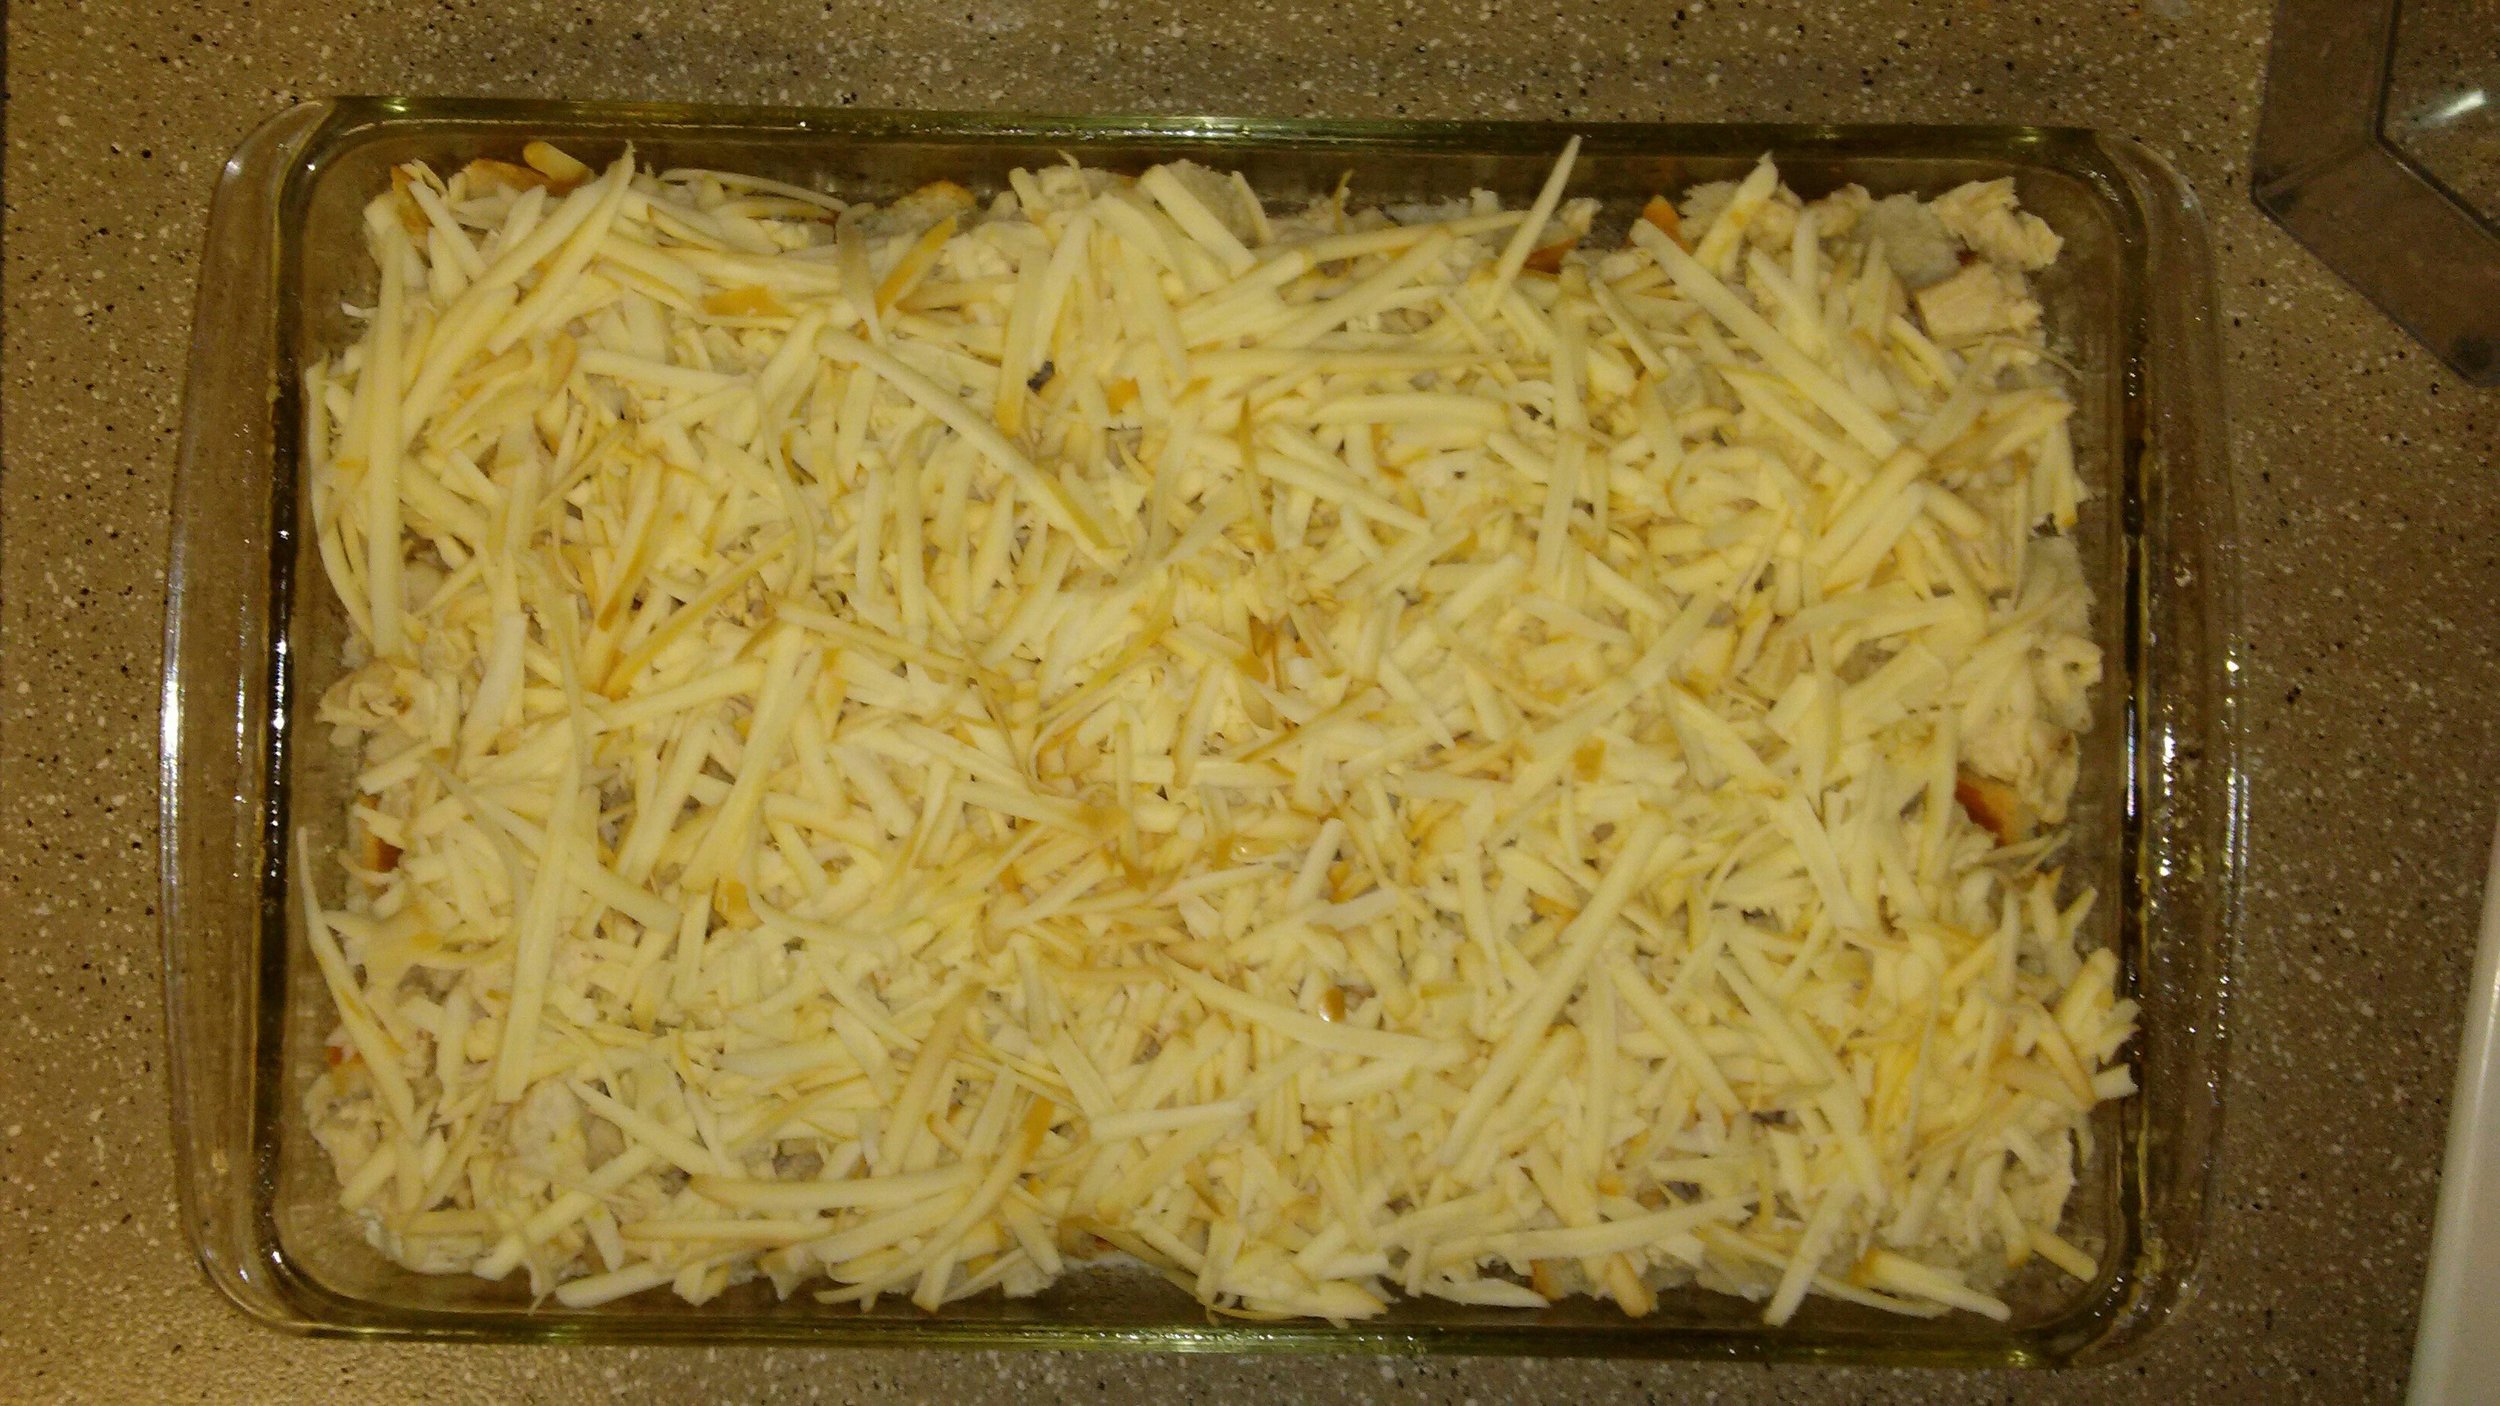 Add the freshly shredded cheese